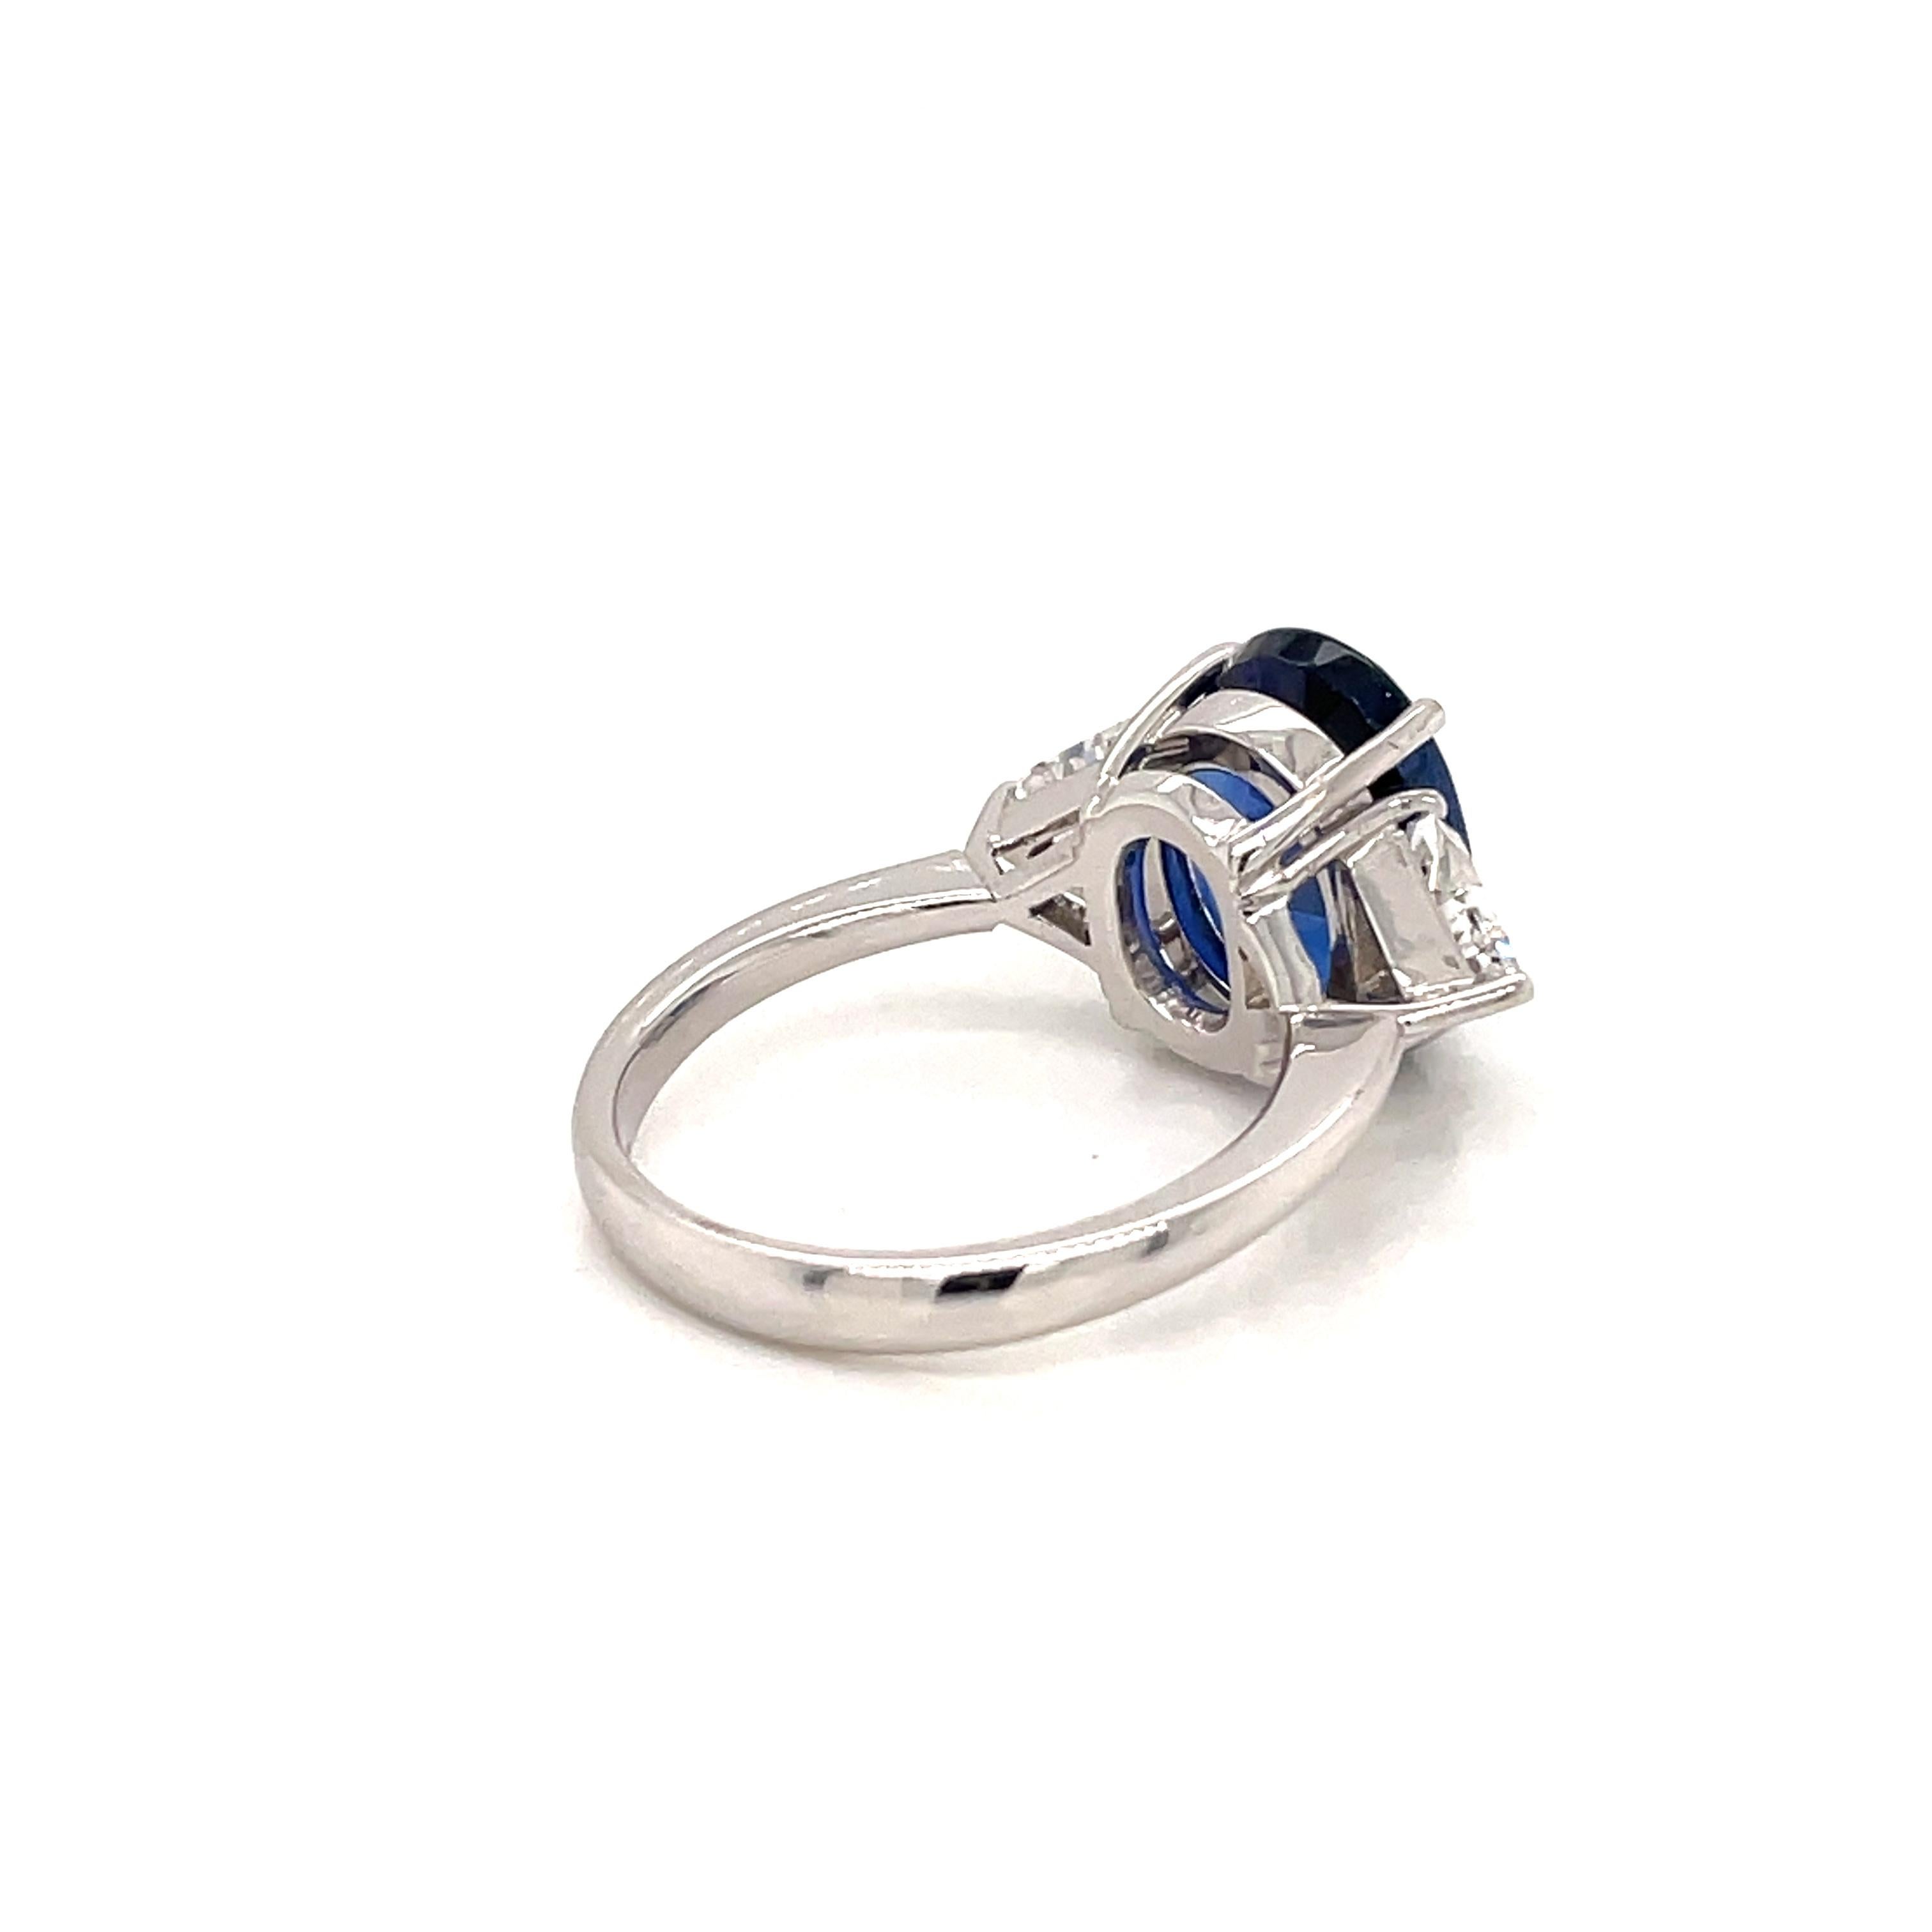 Vintage Certified 6 Carat Unheated Burma Sapphire Diamond Engagement Ring 5